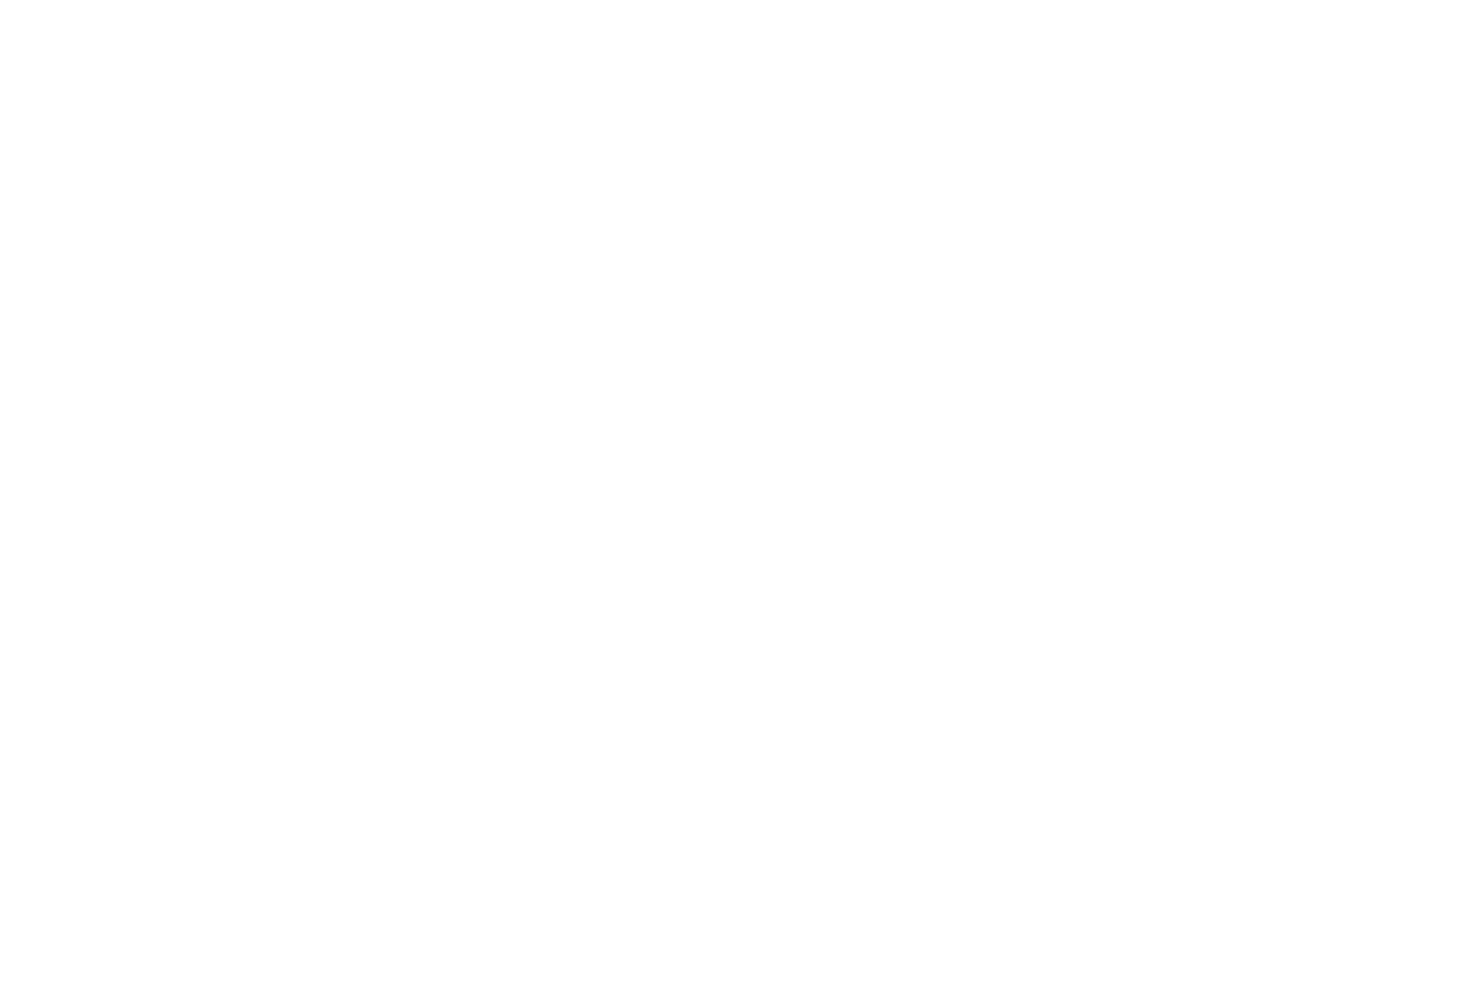 Golden Years Behavioral Health Group